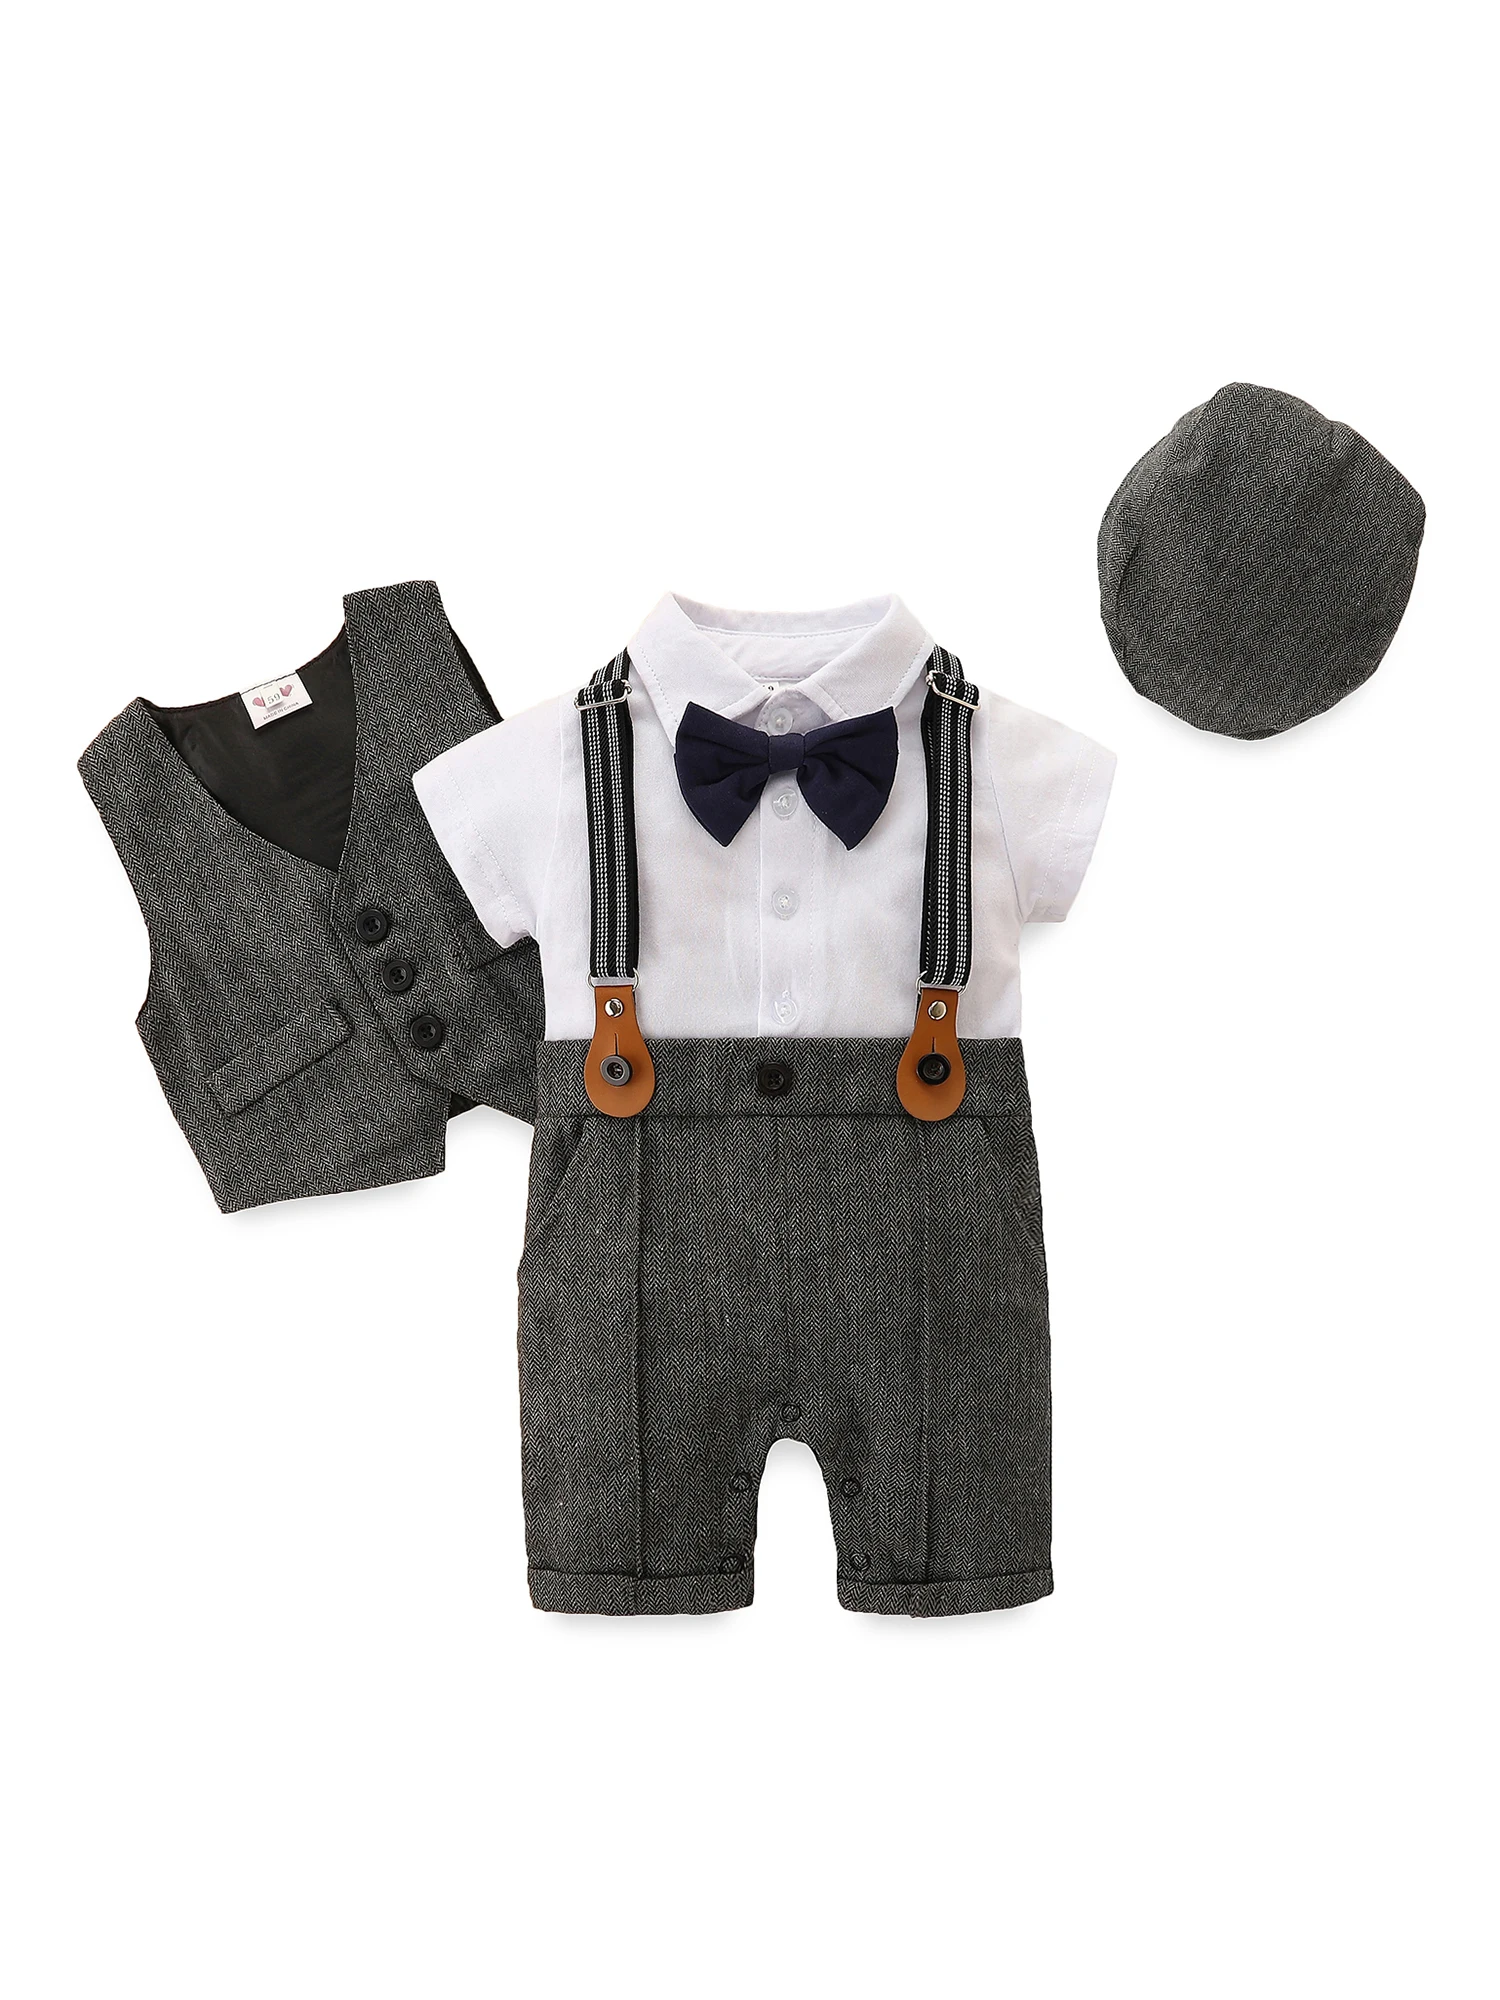 

Infant Newborn Baby Boys Jumpsuit Set Gentleman Short Sleeve Romper Gilet Hat Summer Outfit